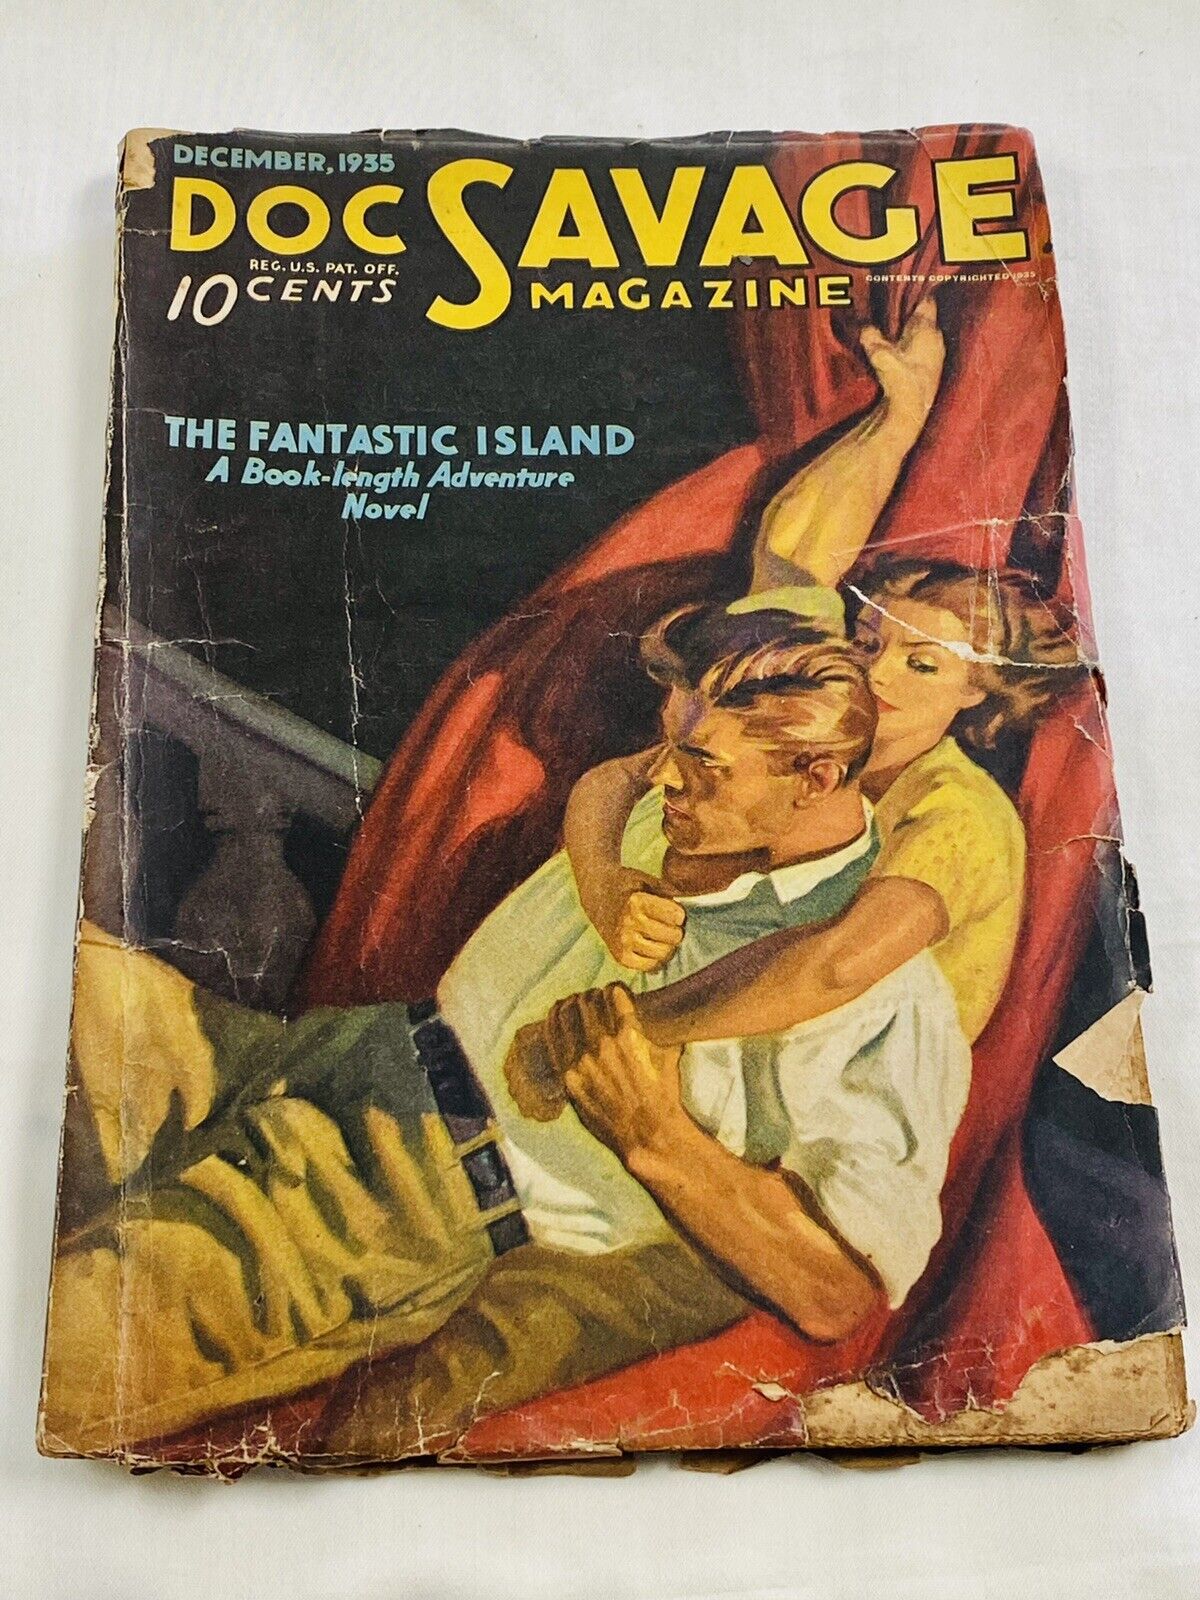 Original Doc Savage December 1935 Pulp Magazine “Fantastic Island” Volume 6 # 4